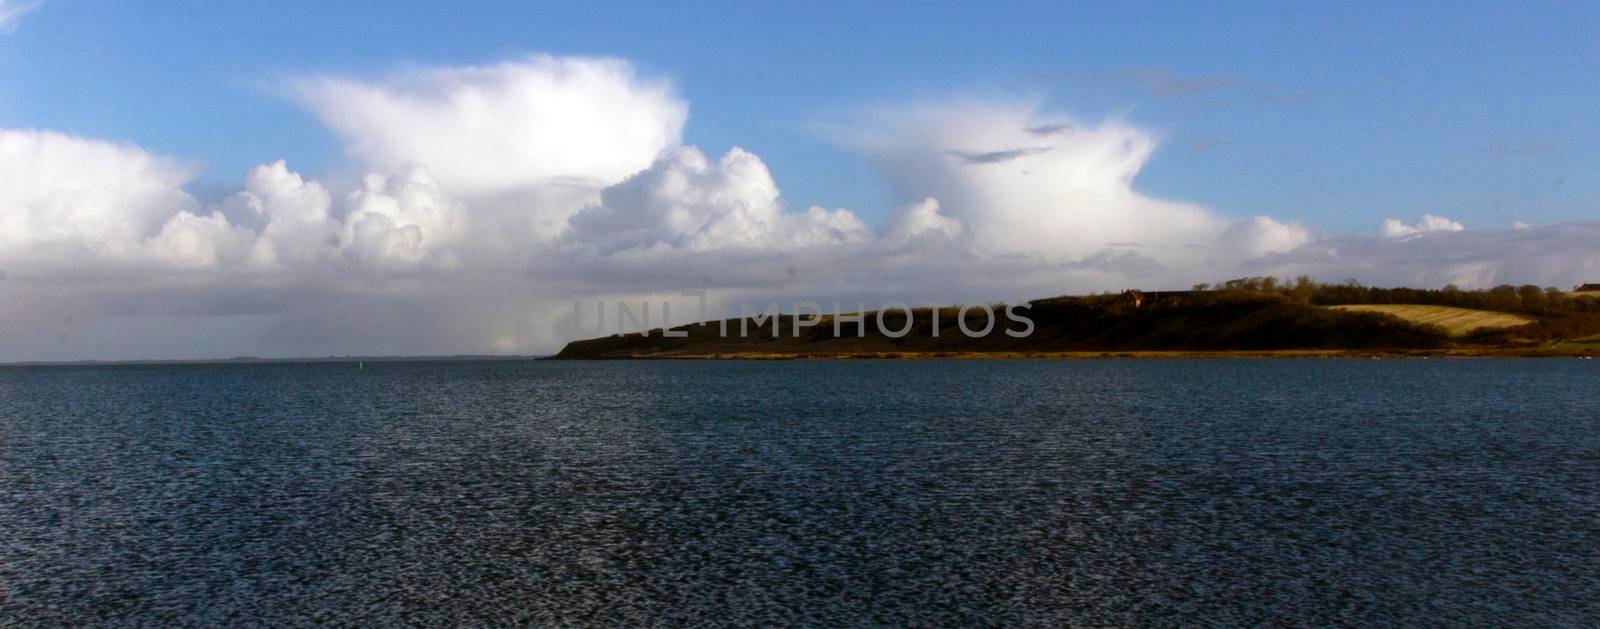 Lemvig, Denmark coastline panorama by Lirch